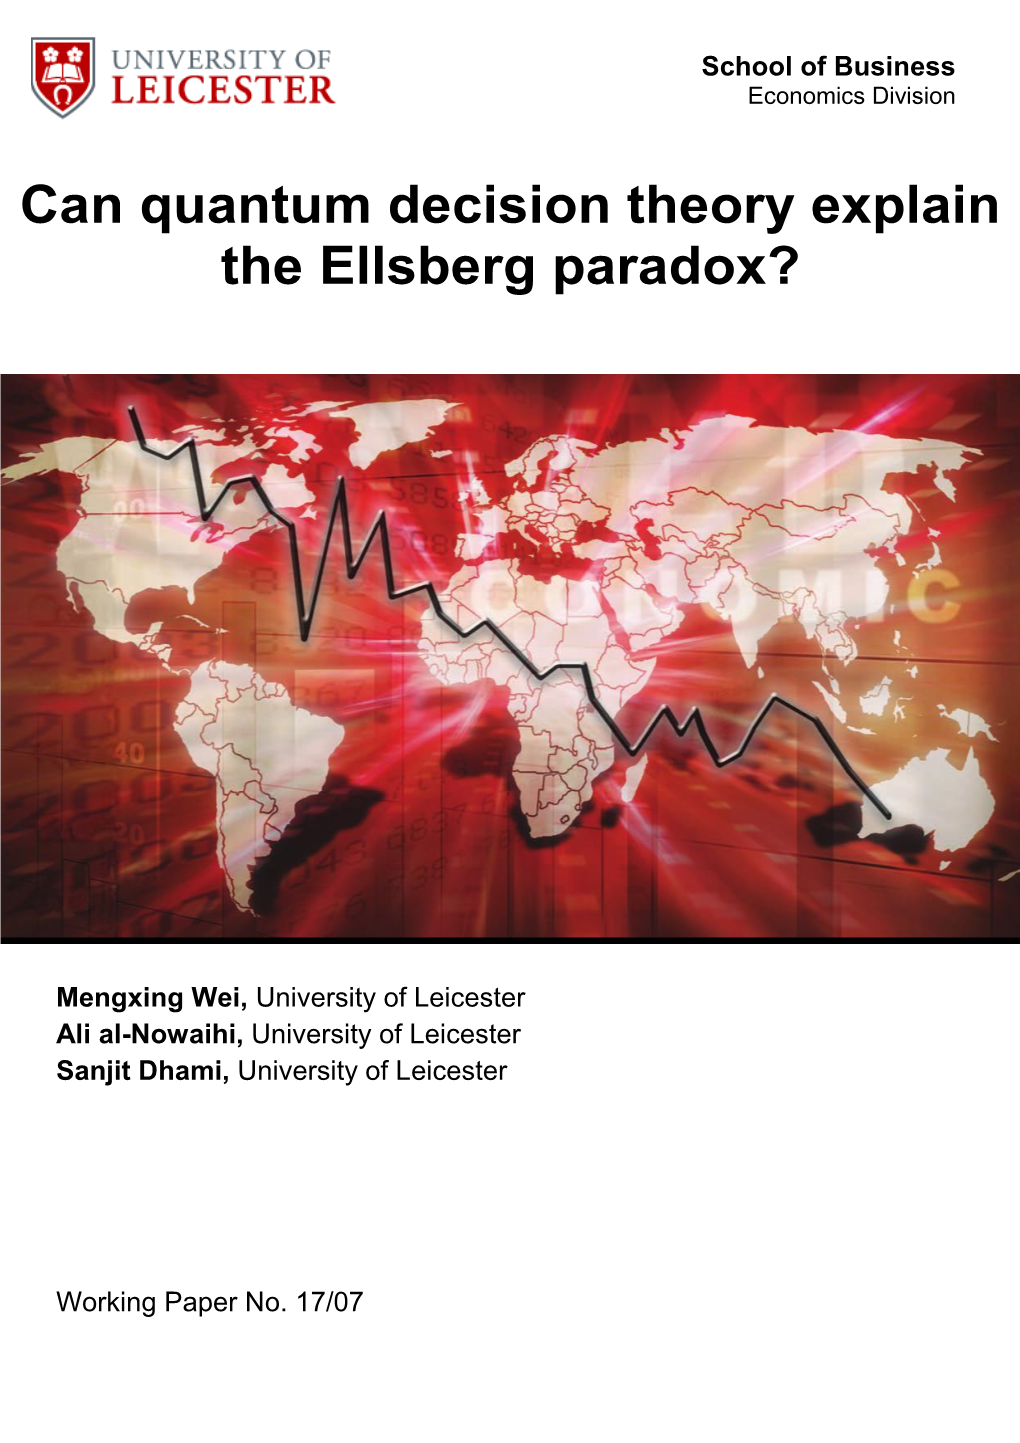 Can Quantum Decision Theory Explain the Ellsberg Paradox?